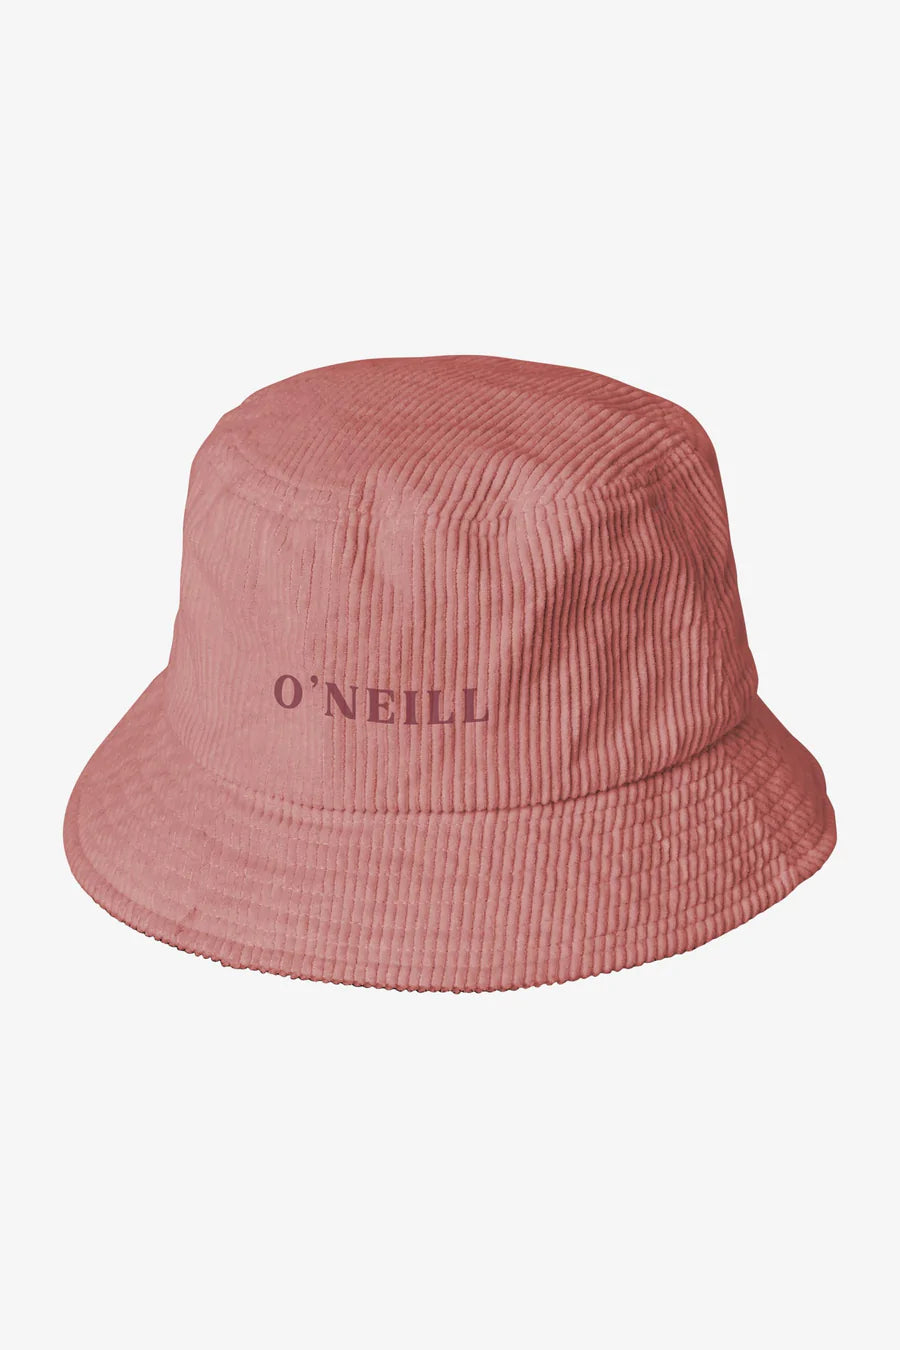 Oneill Piper Women's Bucket Hats - Multi Womens Hat Piper Pink Cord